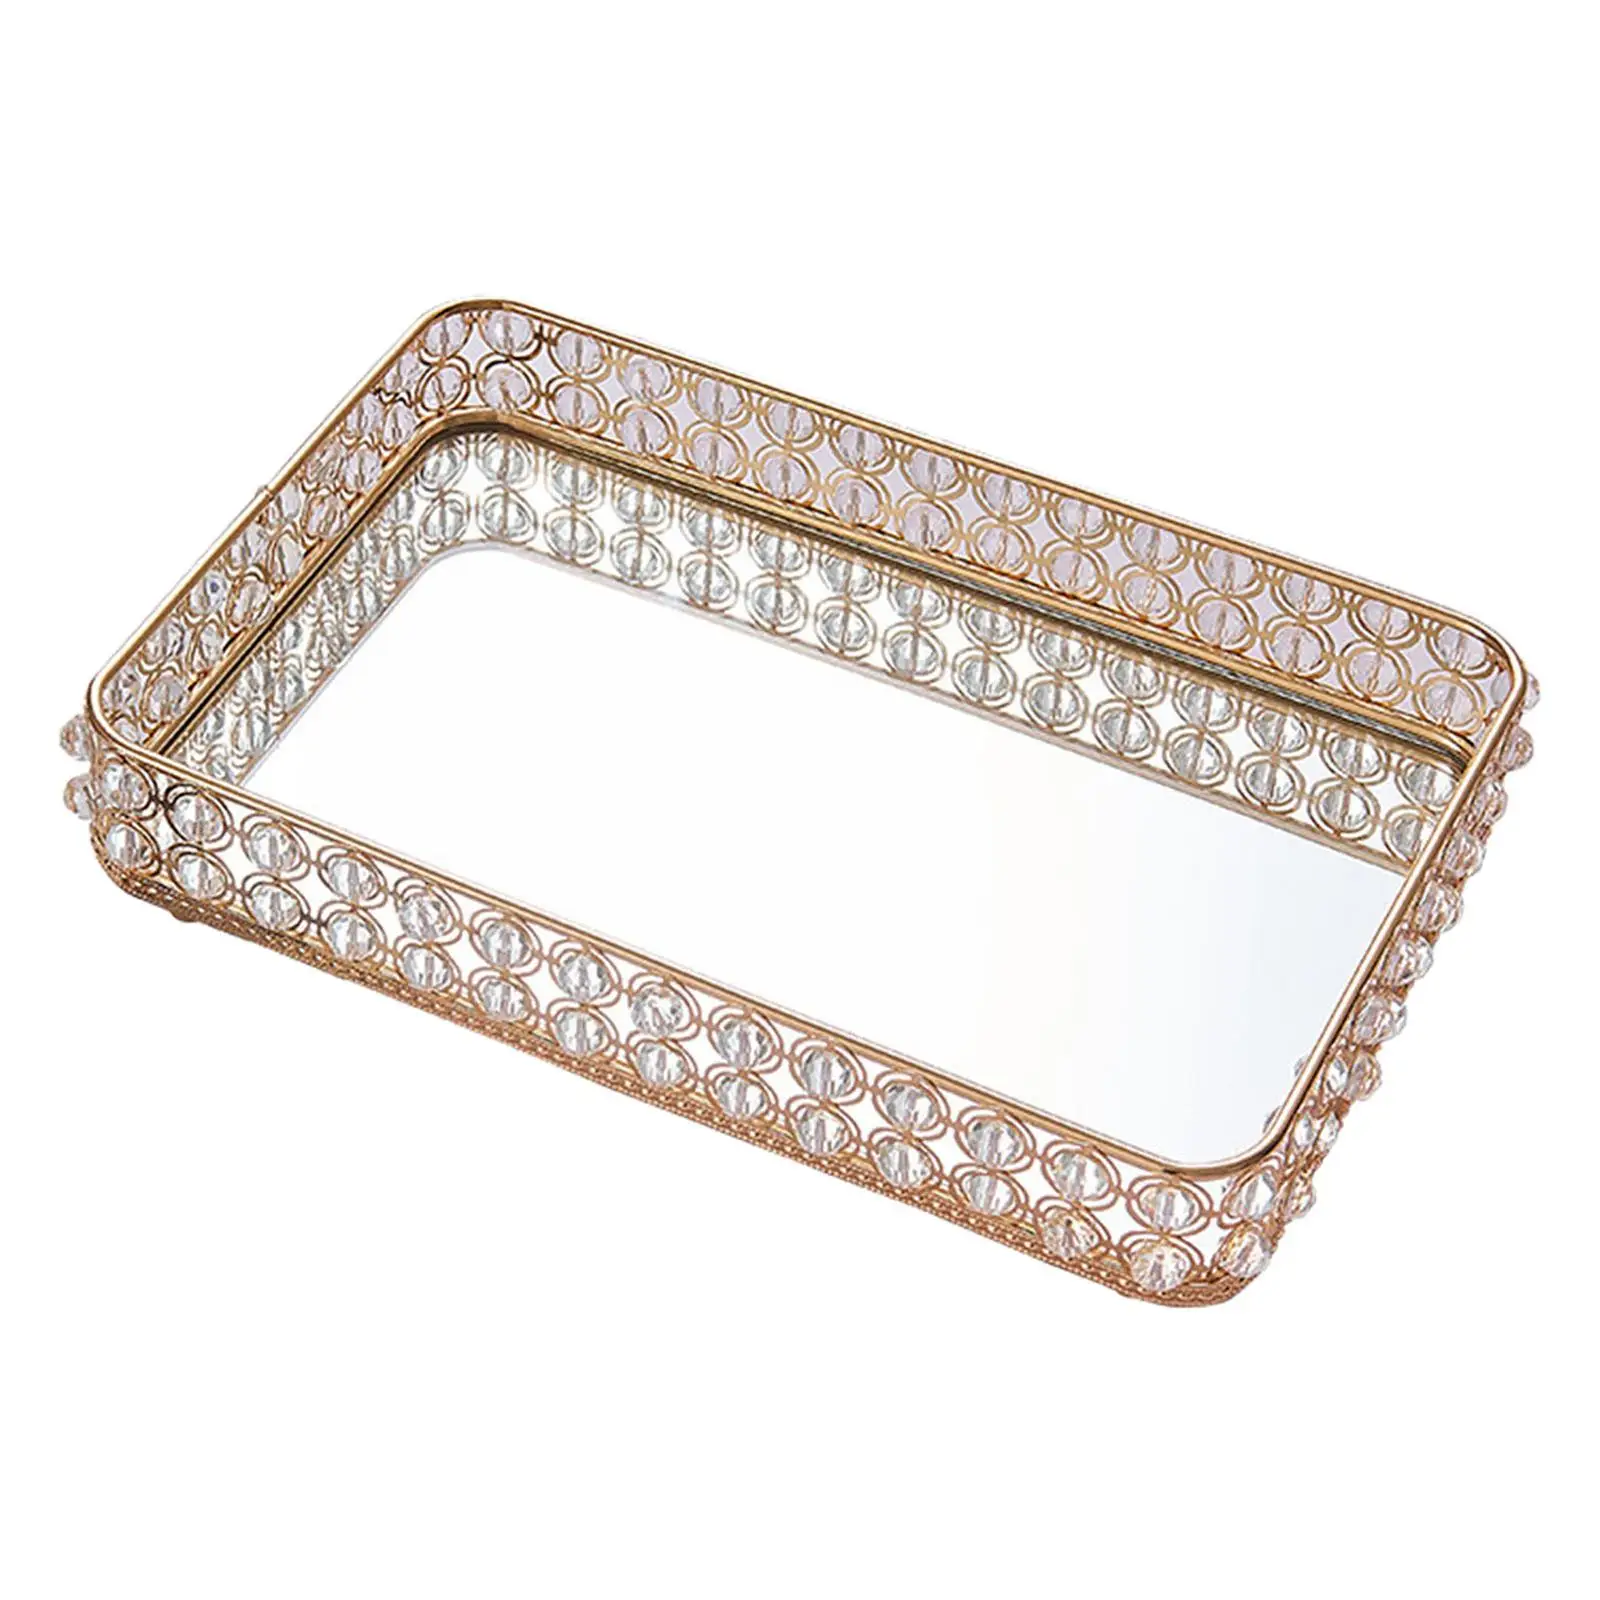 Ornate Jewelry Trinket Tray 25Cmx15cm Home Decorative Organizer Perfume Tray Rectangle Mirrored Crystal Tray Makeup Tray